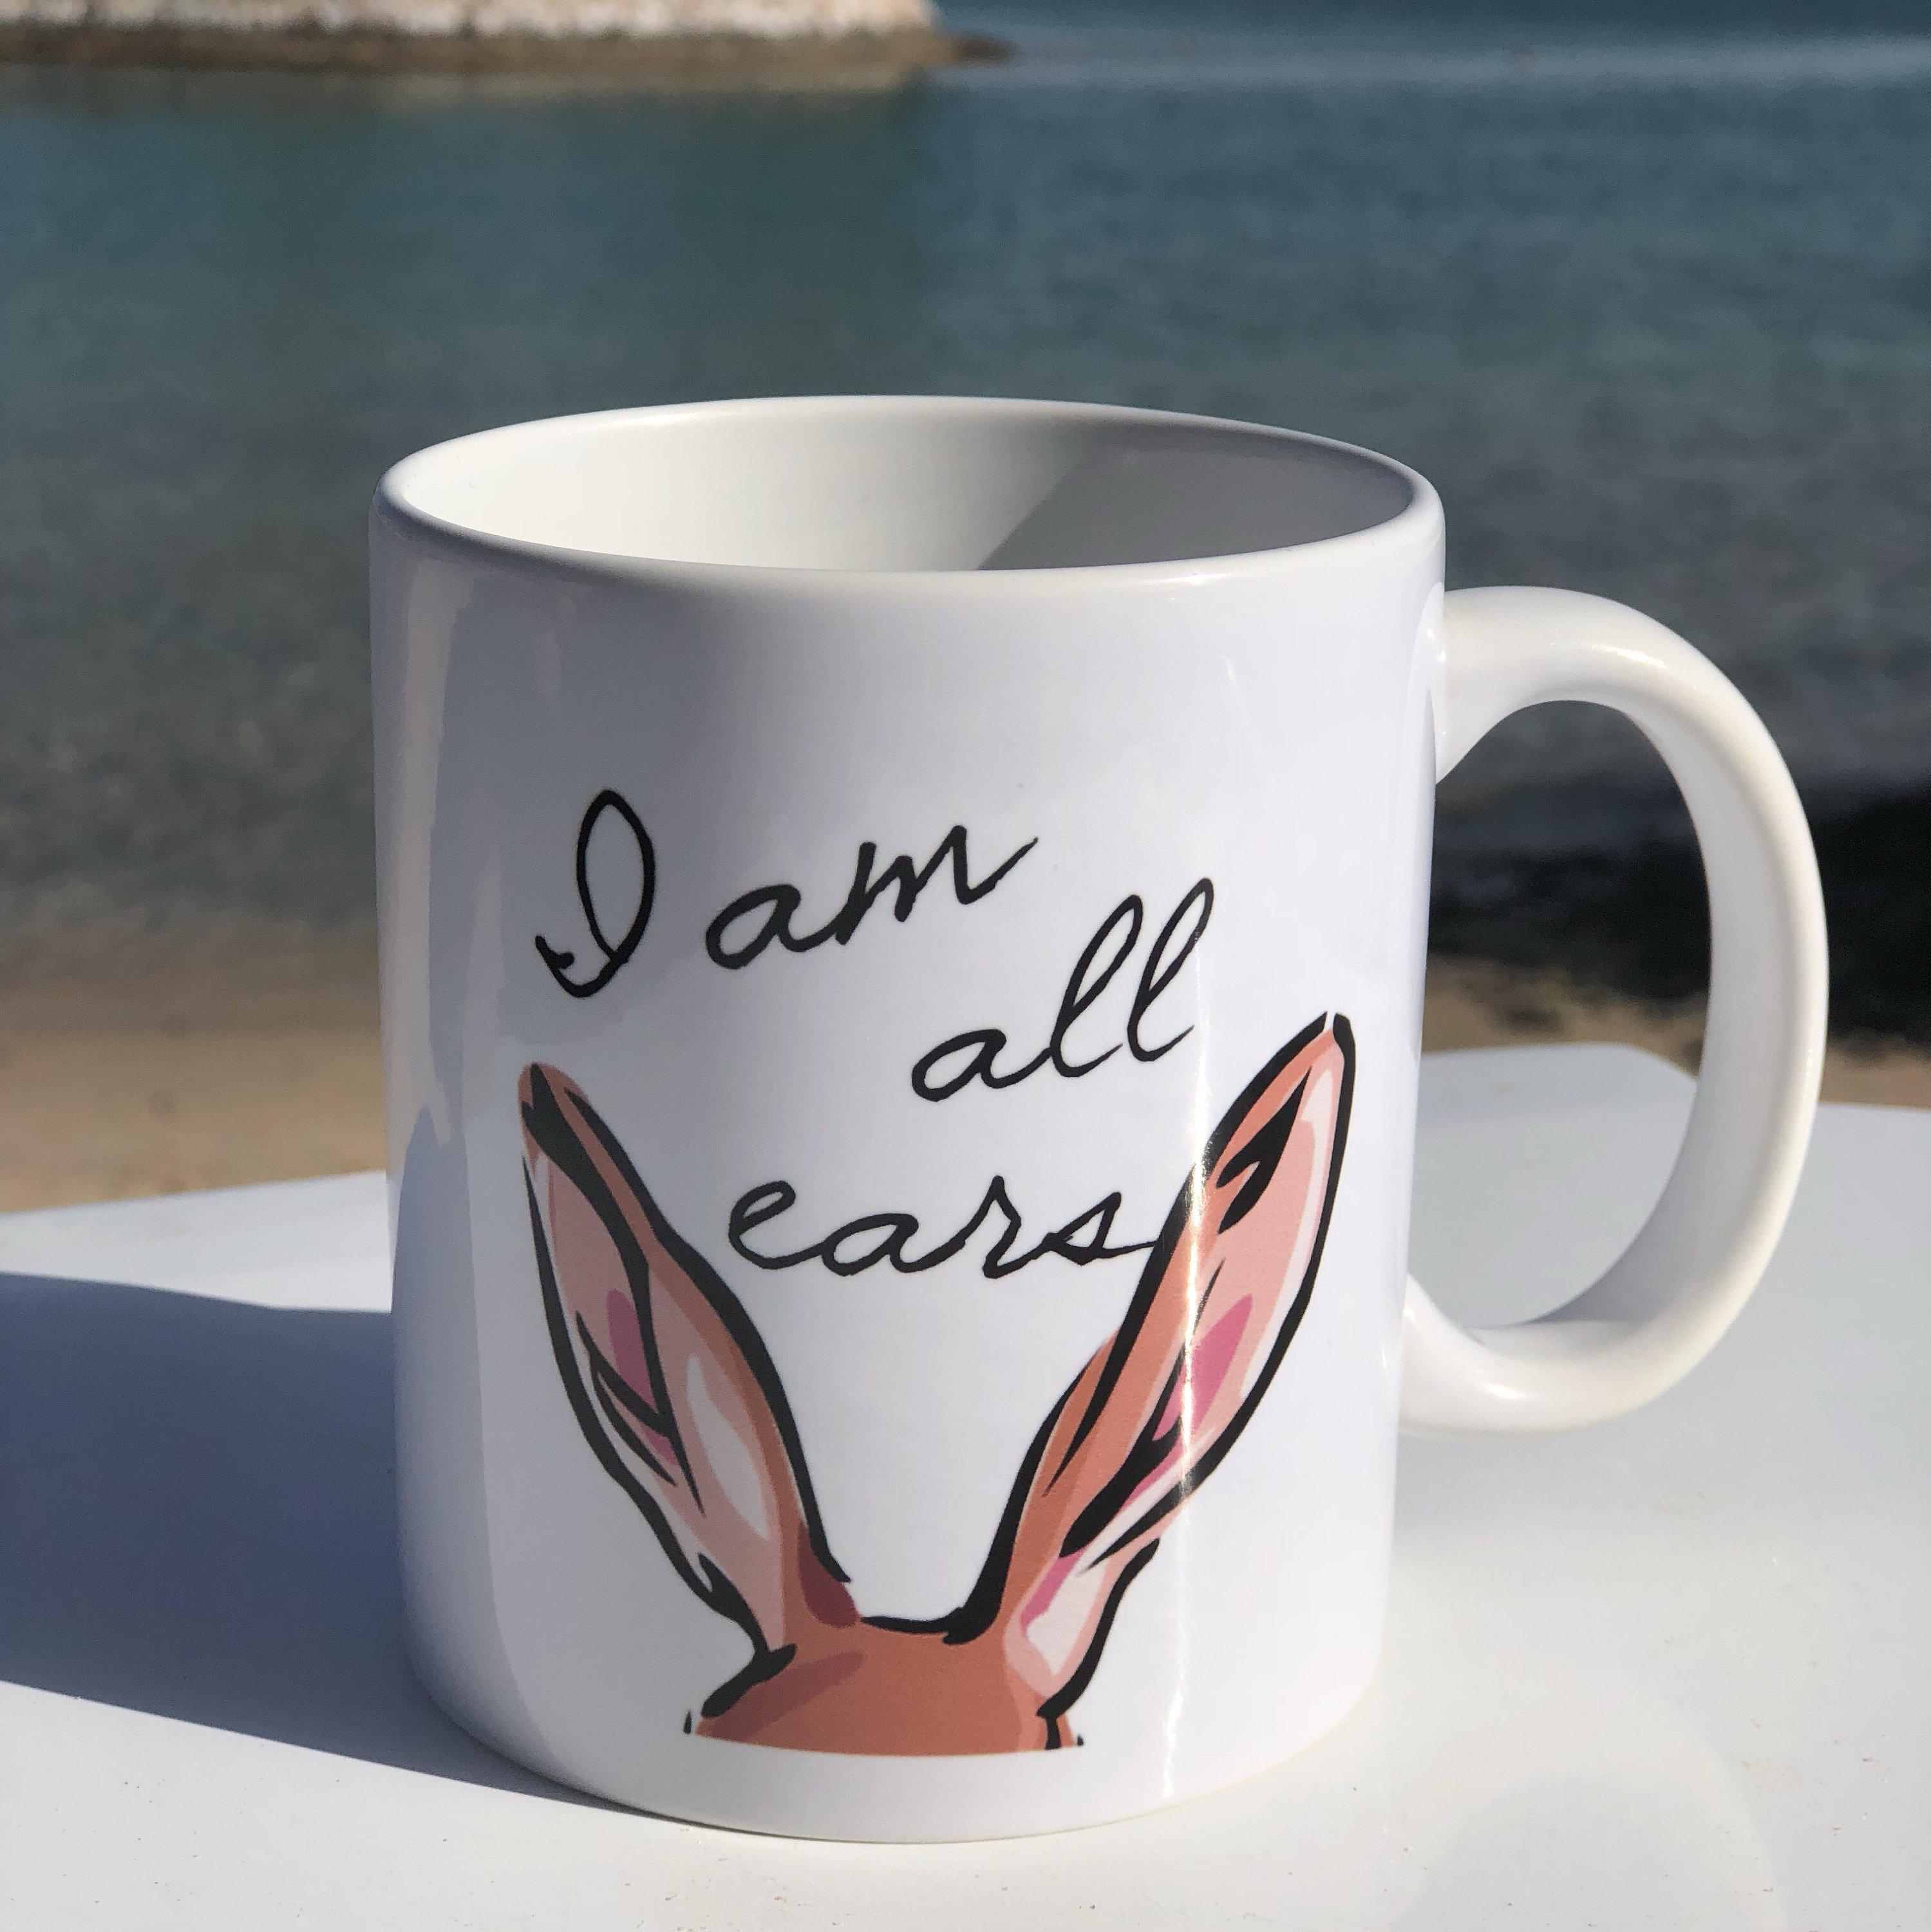 I Am All Ears Therapist Mug